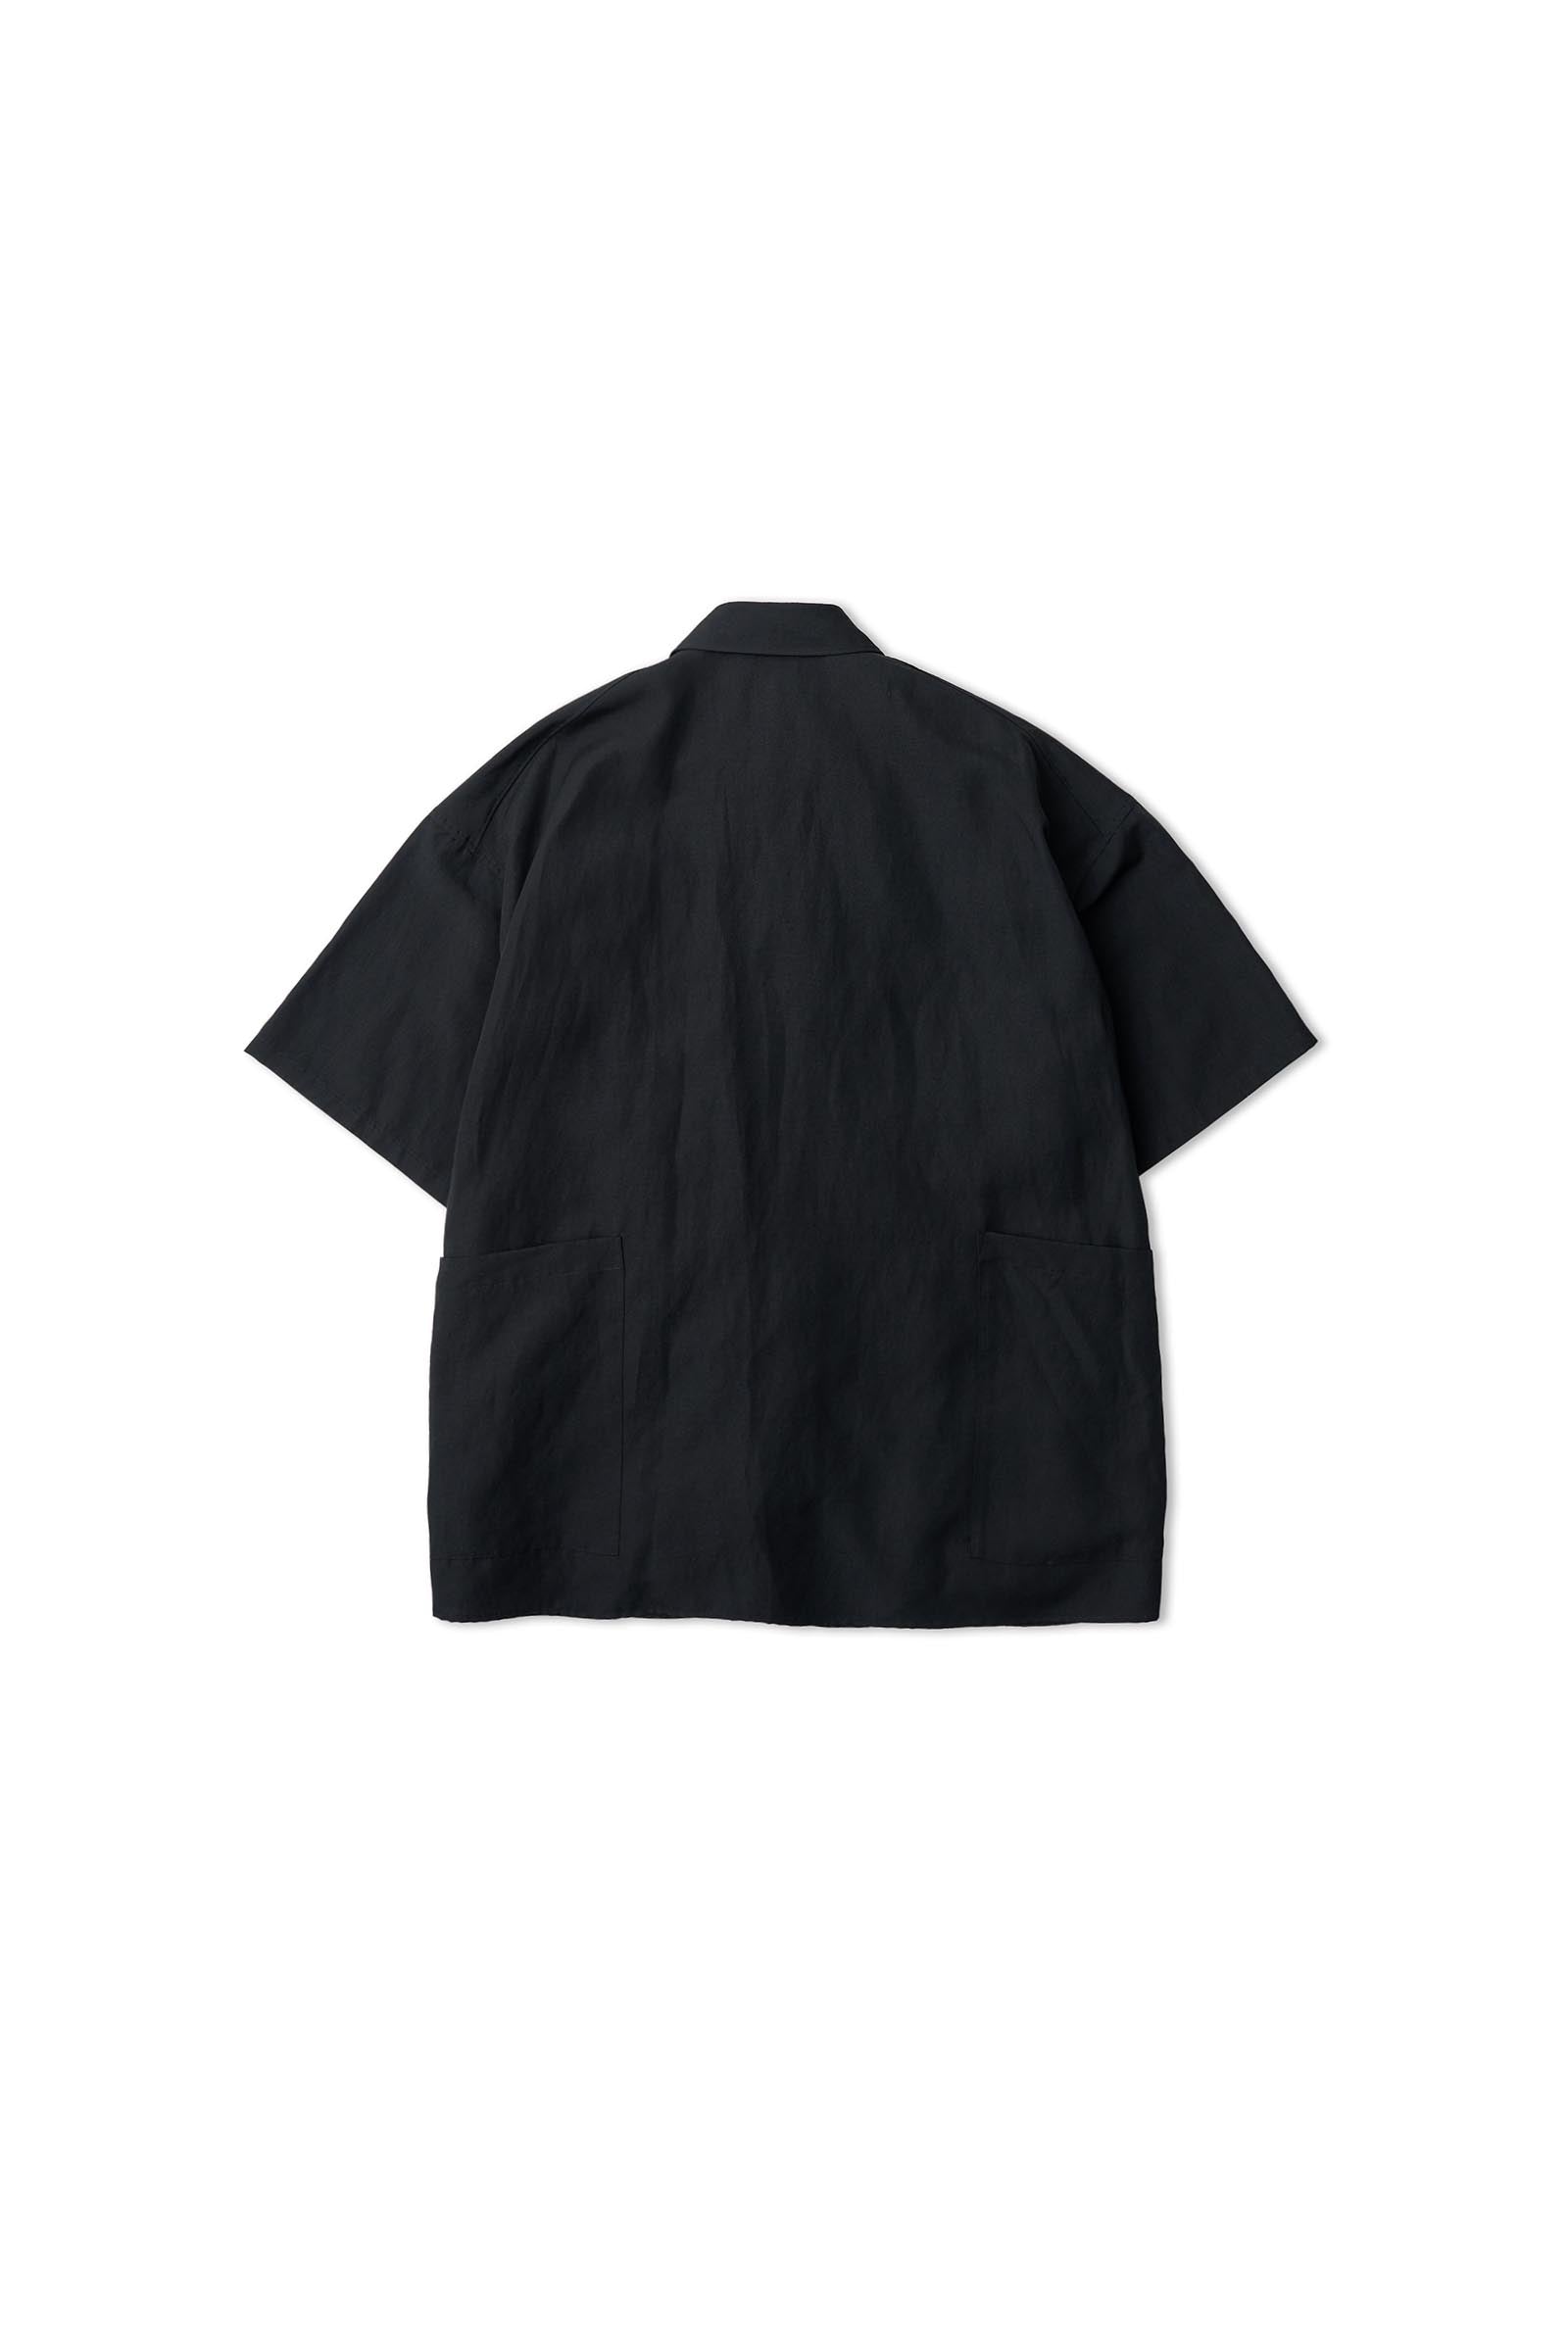 DIGAWEL / Side pocket S/S shirt②